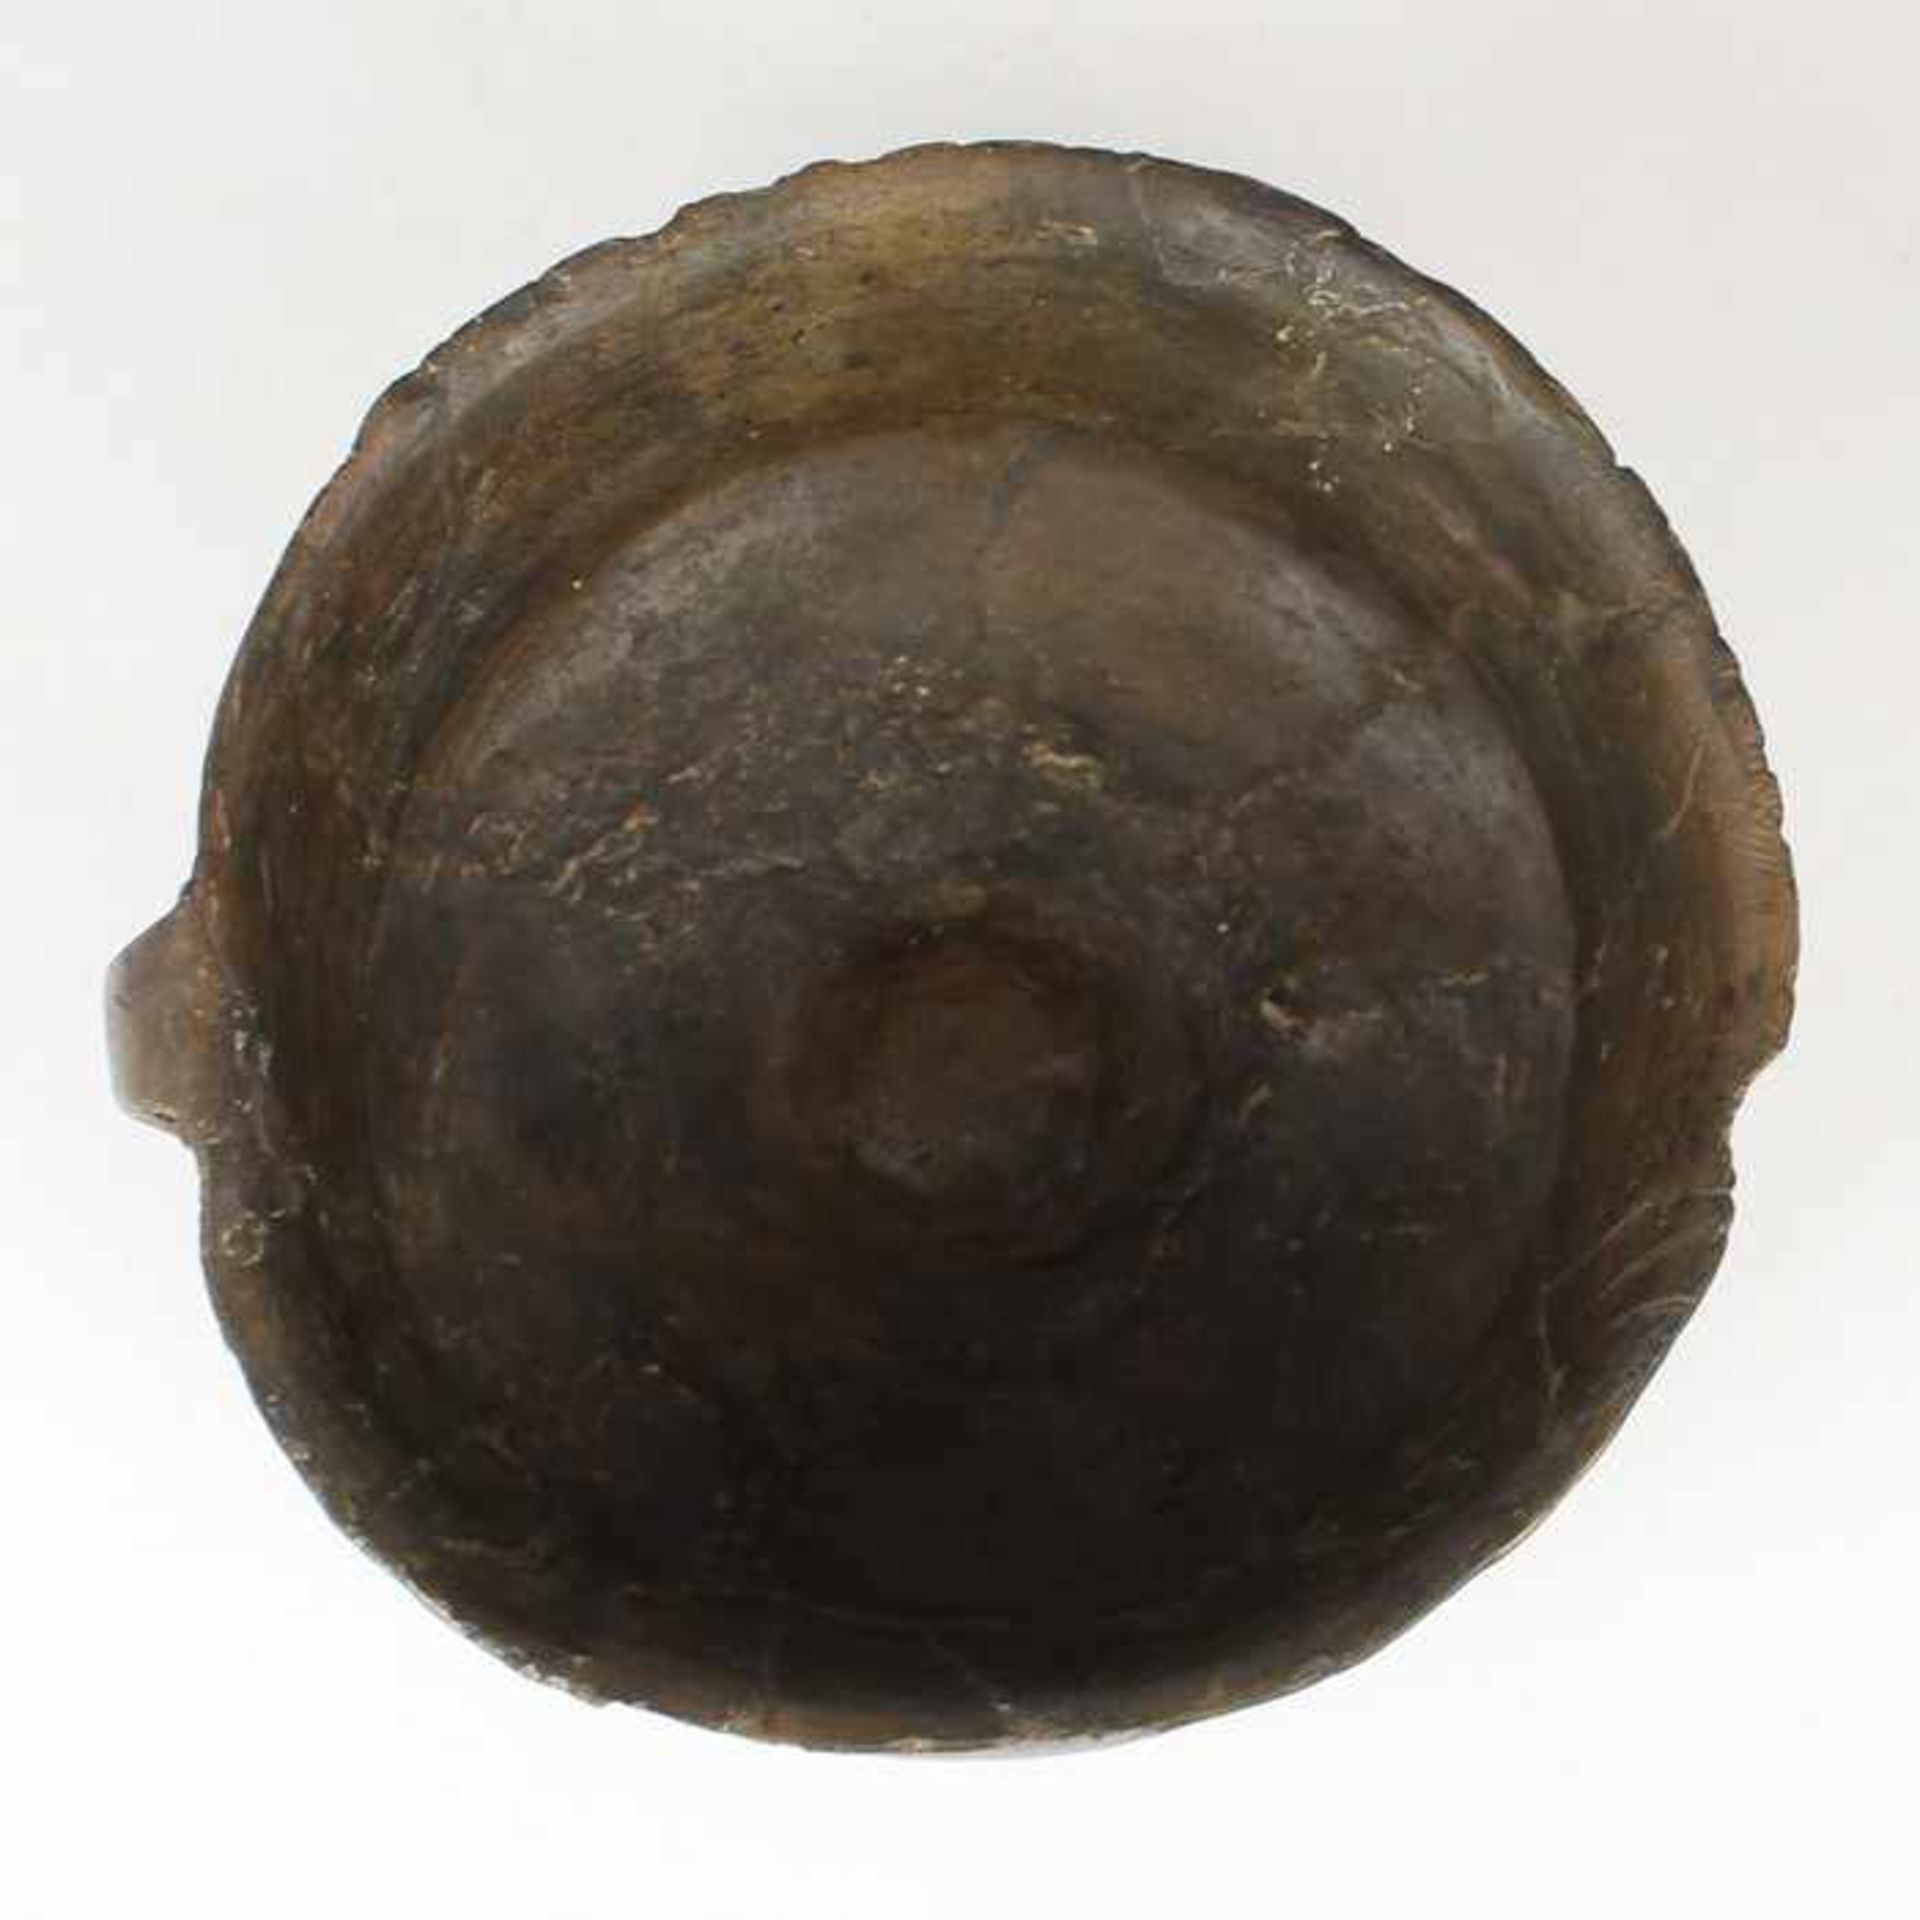 TrinkgefäßNeolithikum, um 4000 v. Chr., Arborner Kulturen, Egg Obere Güll (Fundort), brauner Ton, - Bild 2 aus 3